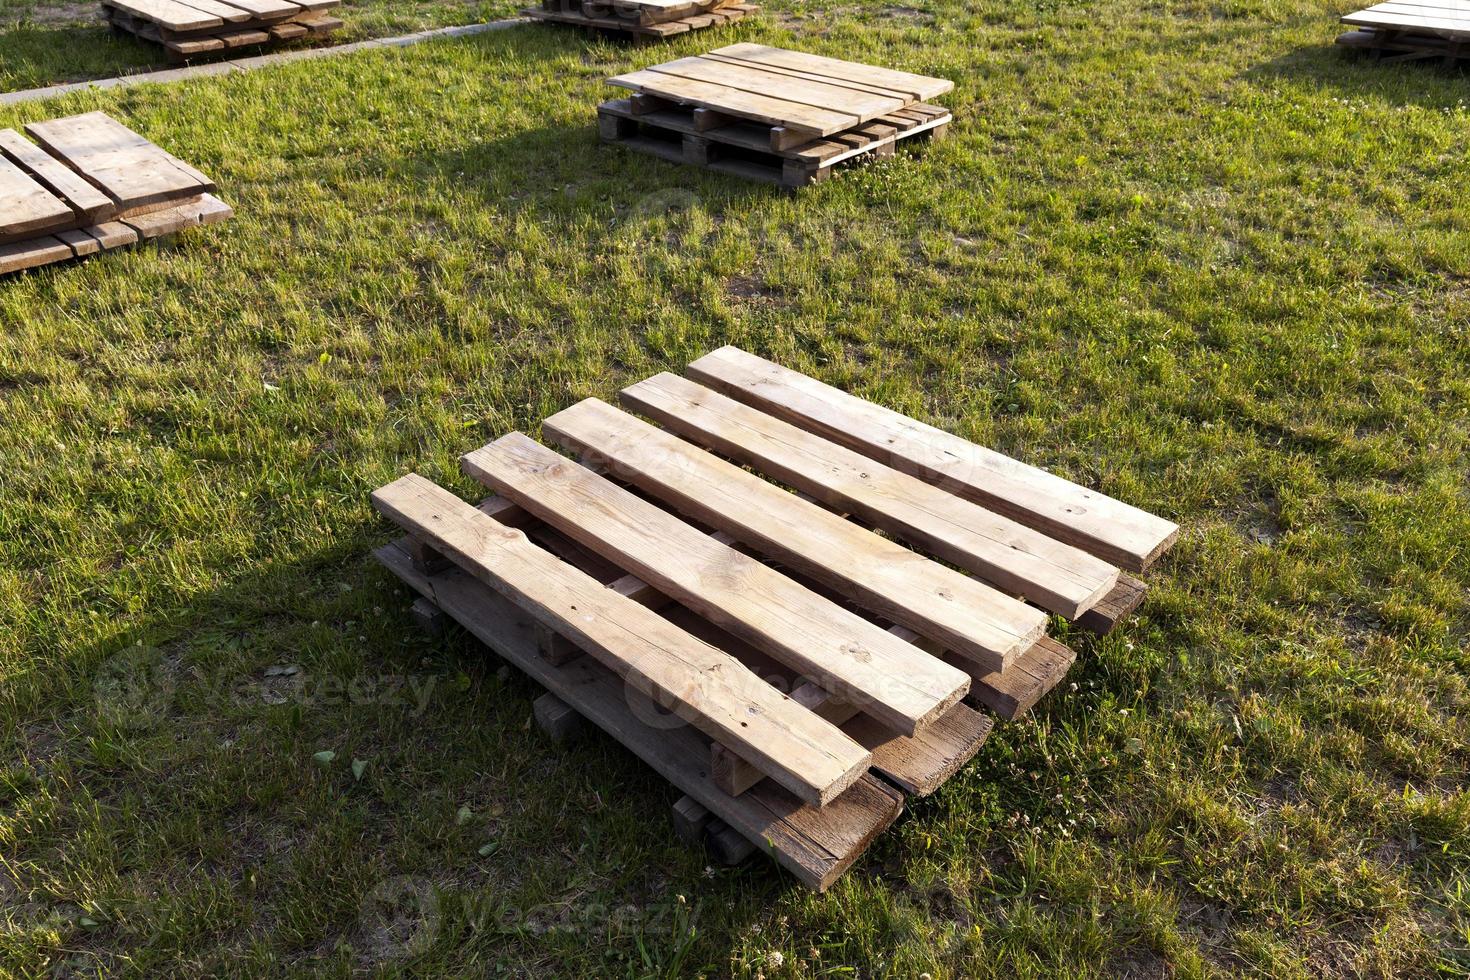 houten pallets op het gras, close-up foto